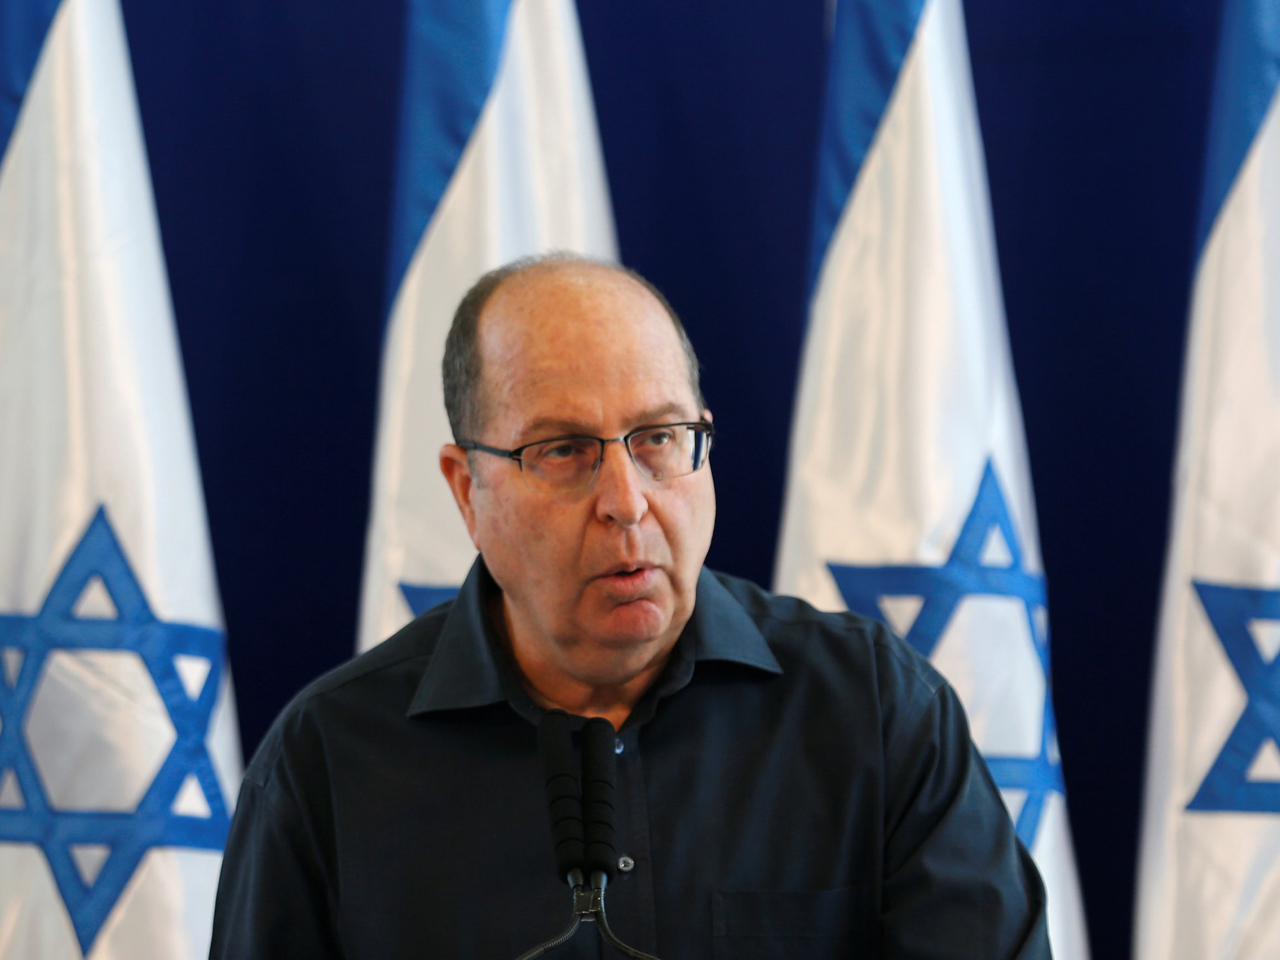 Israel Defense Minister Moshe Yaalon resigns Benjamin Netanyahu